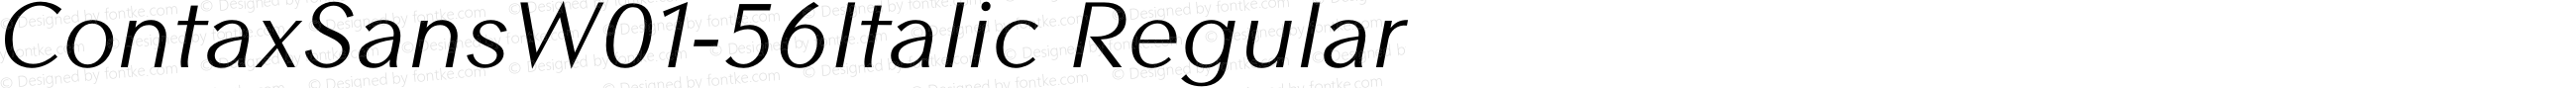 Contax Sans W01 56 Italic